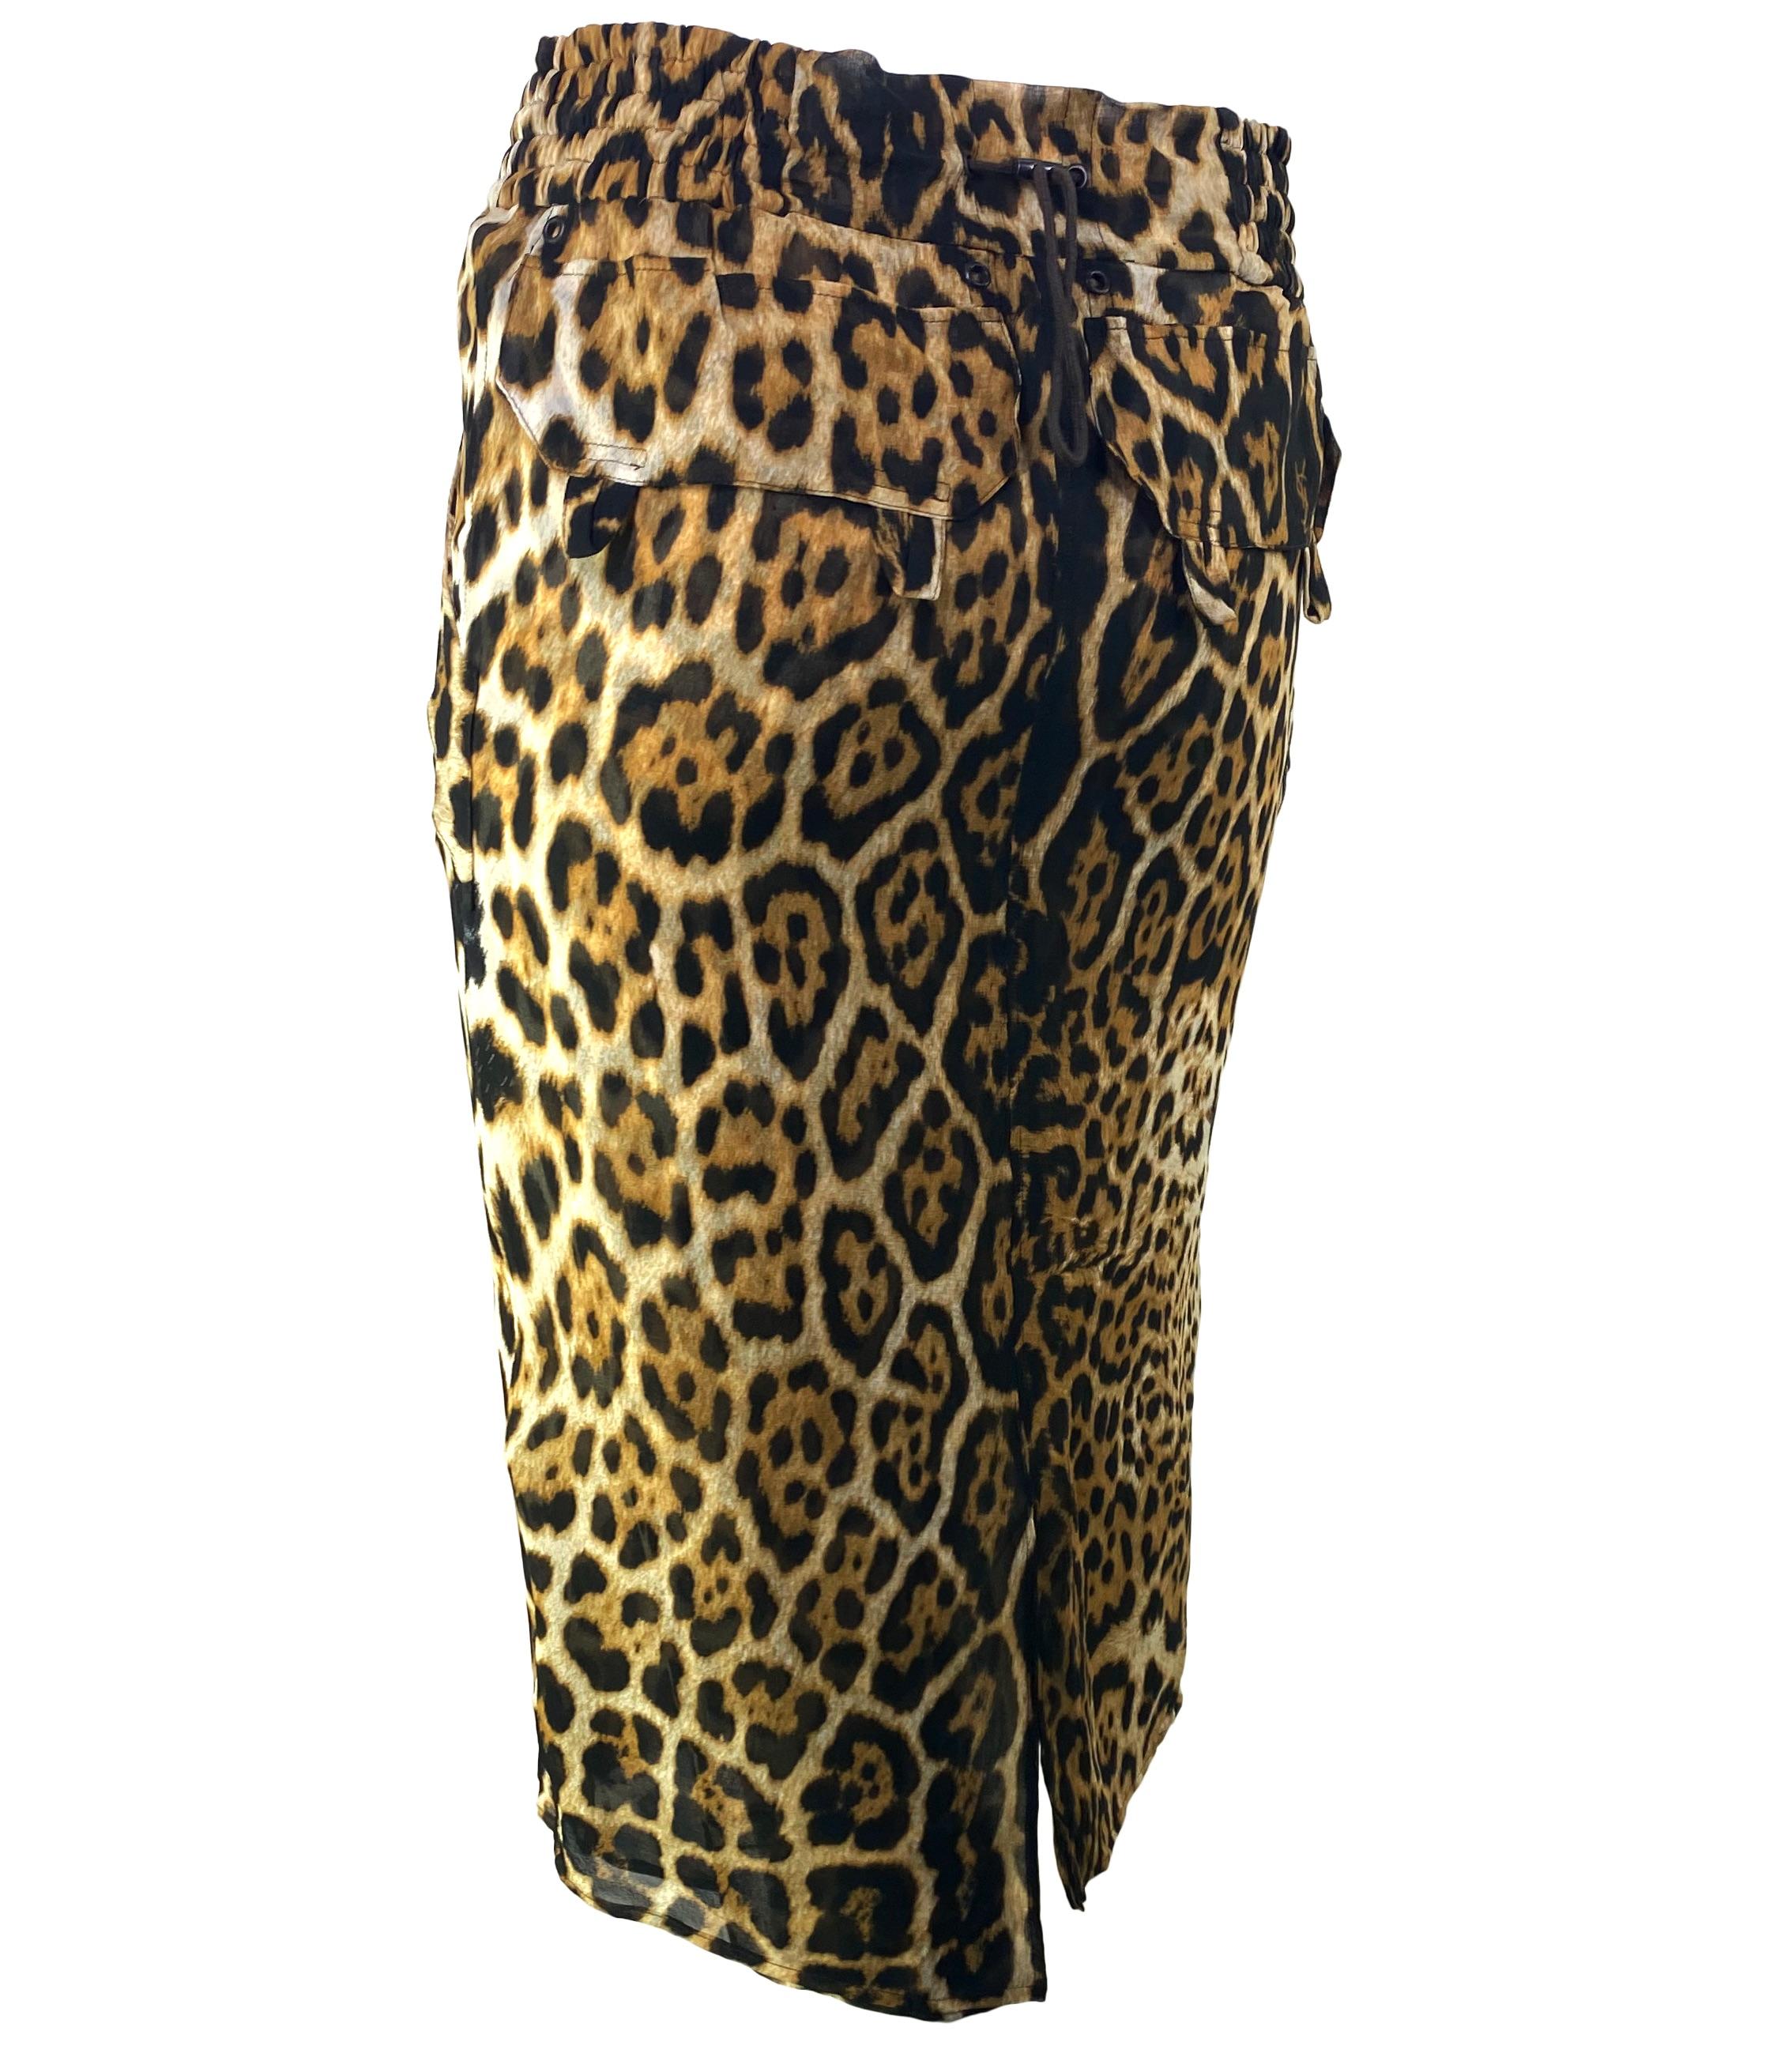 S/S 2002 Yves Saint Laurent by Tom Ford Safari Runway Cheetah Print ...